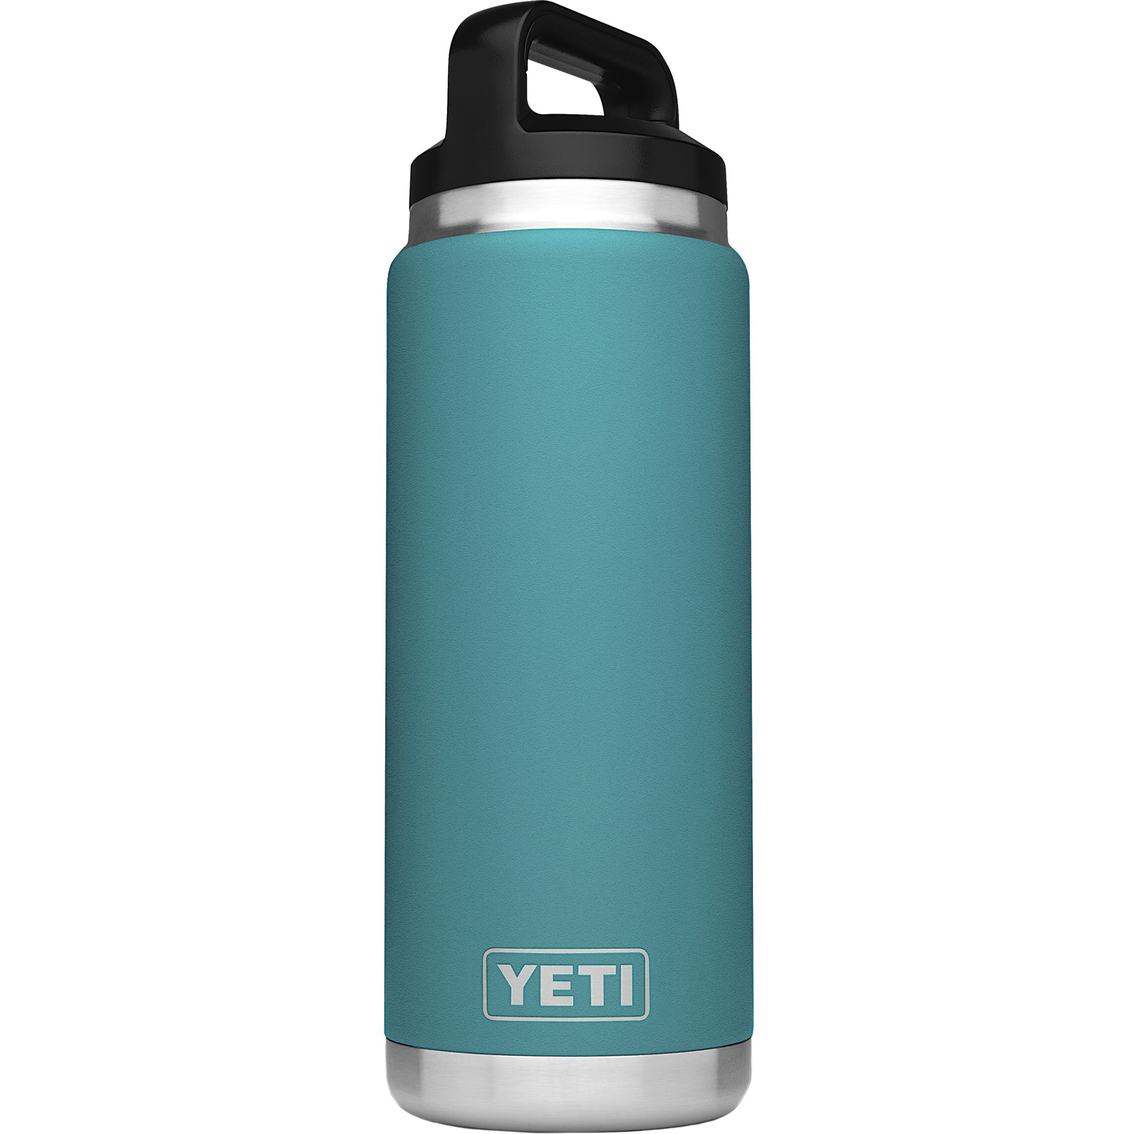 Yeti Rambler 26 Oz. Bottle, Hydration Packs, Sports & Outdoors